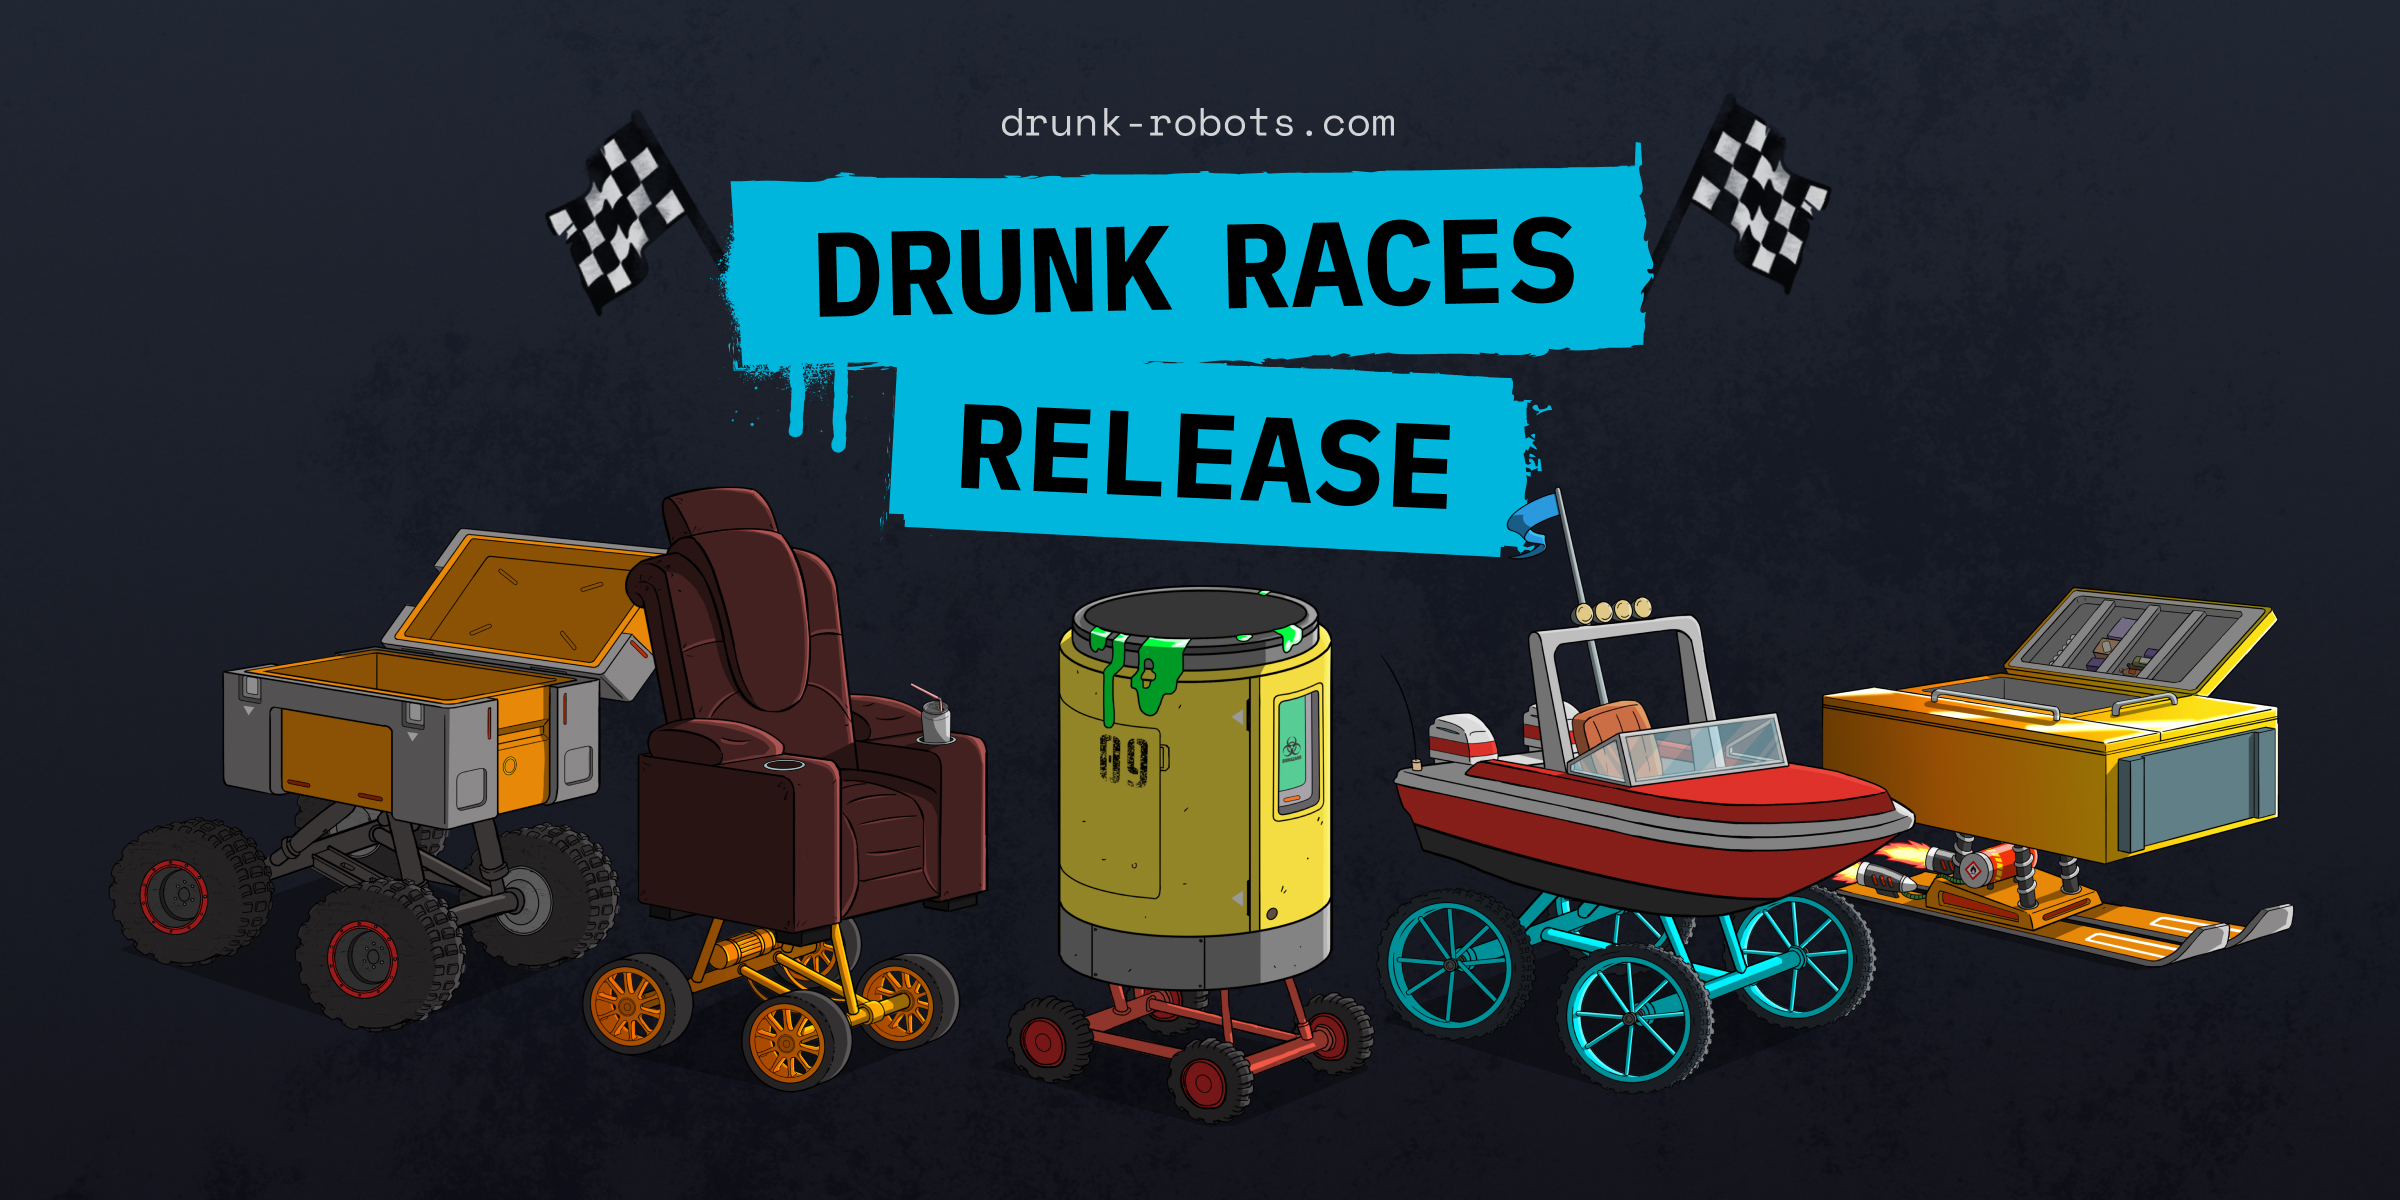 Drunk Robots Adds Drunk Races